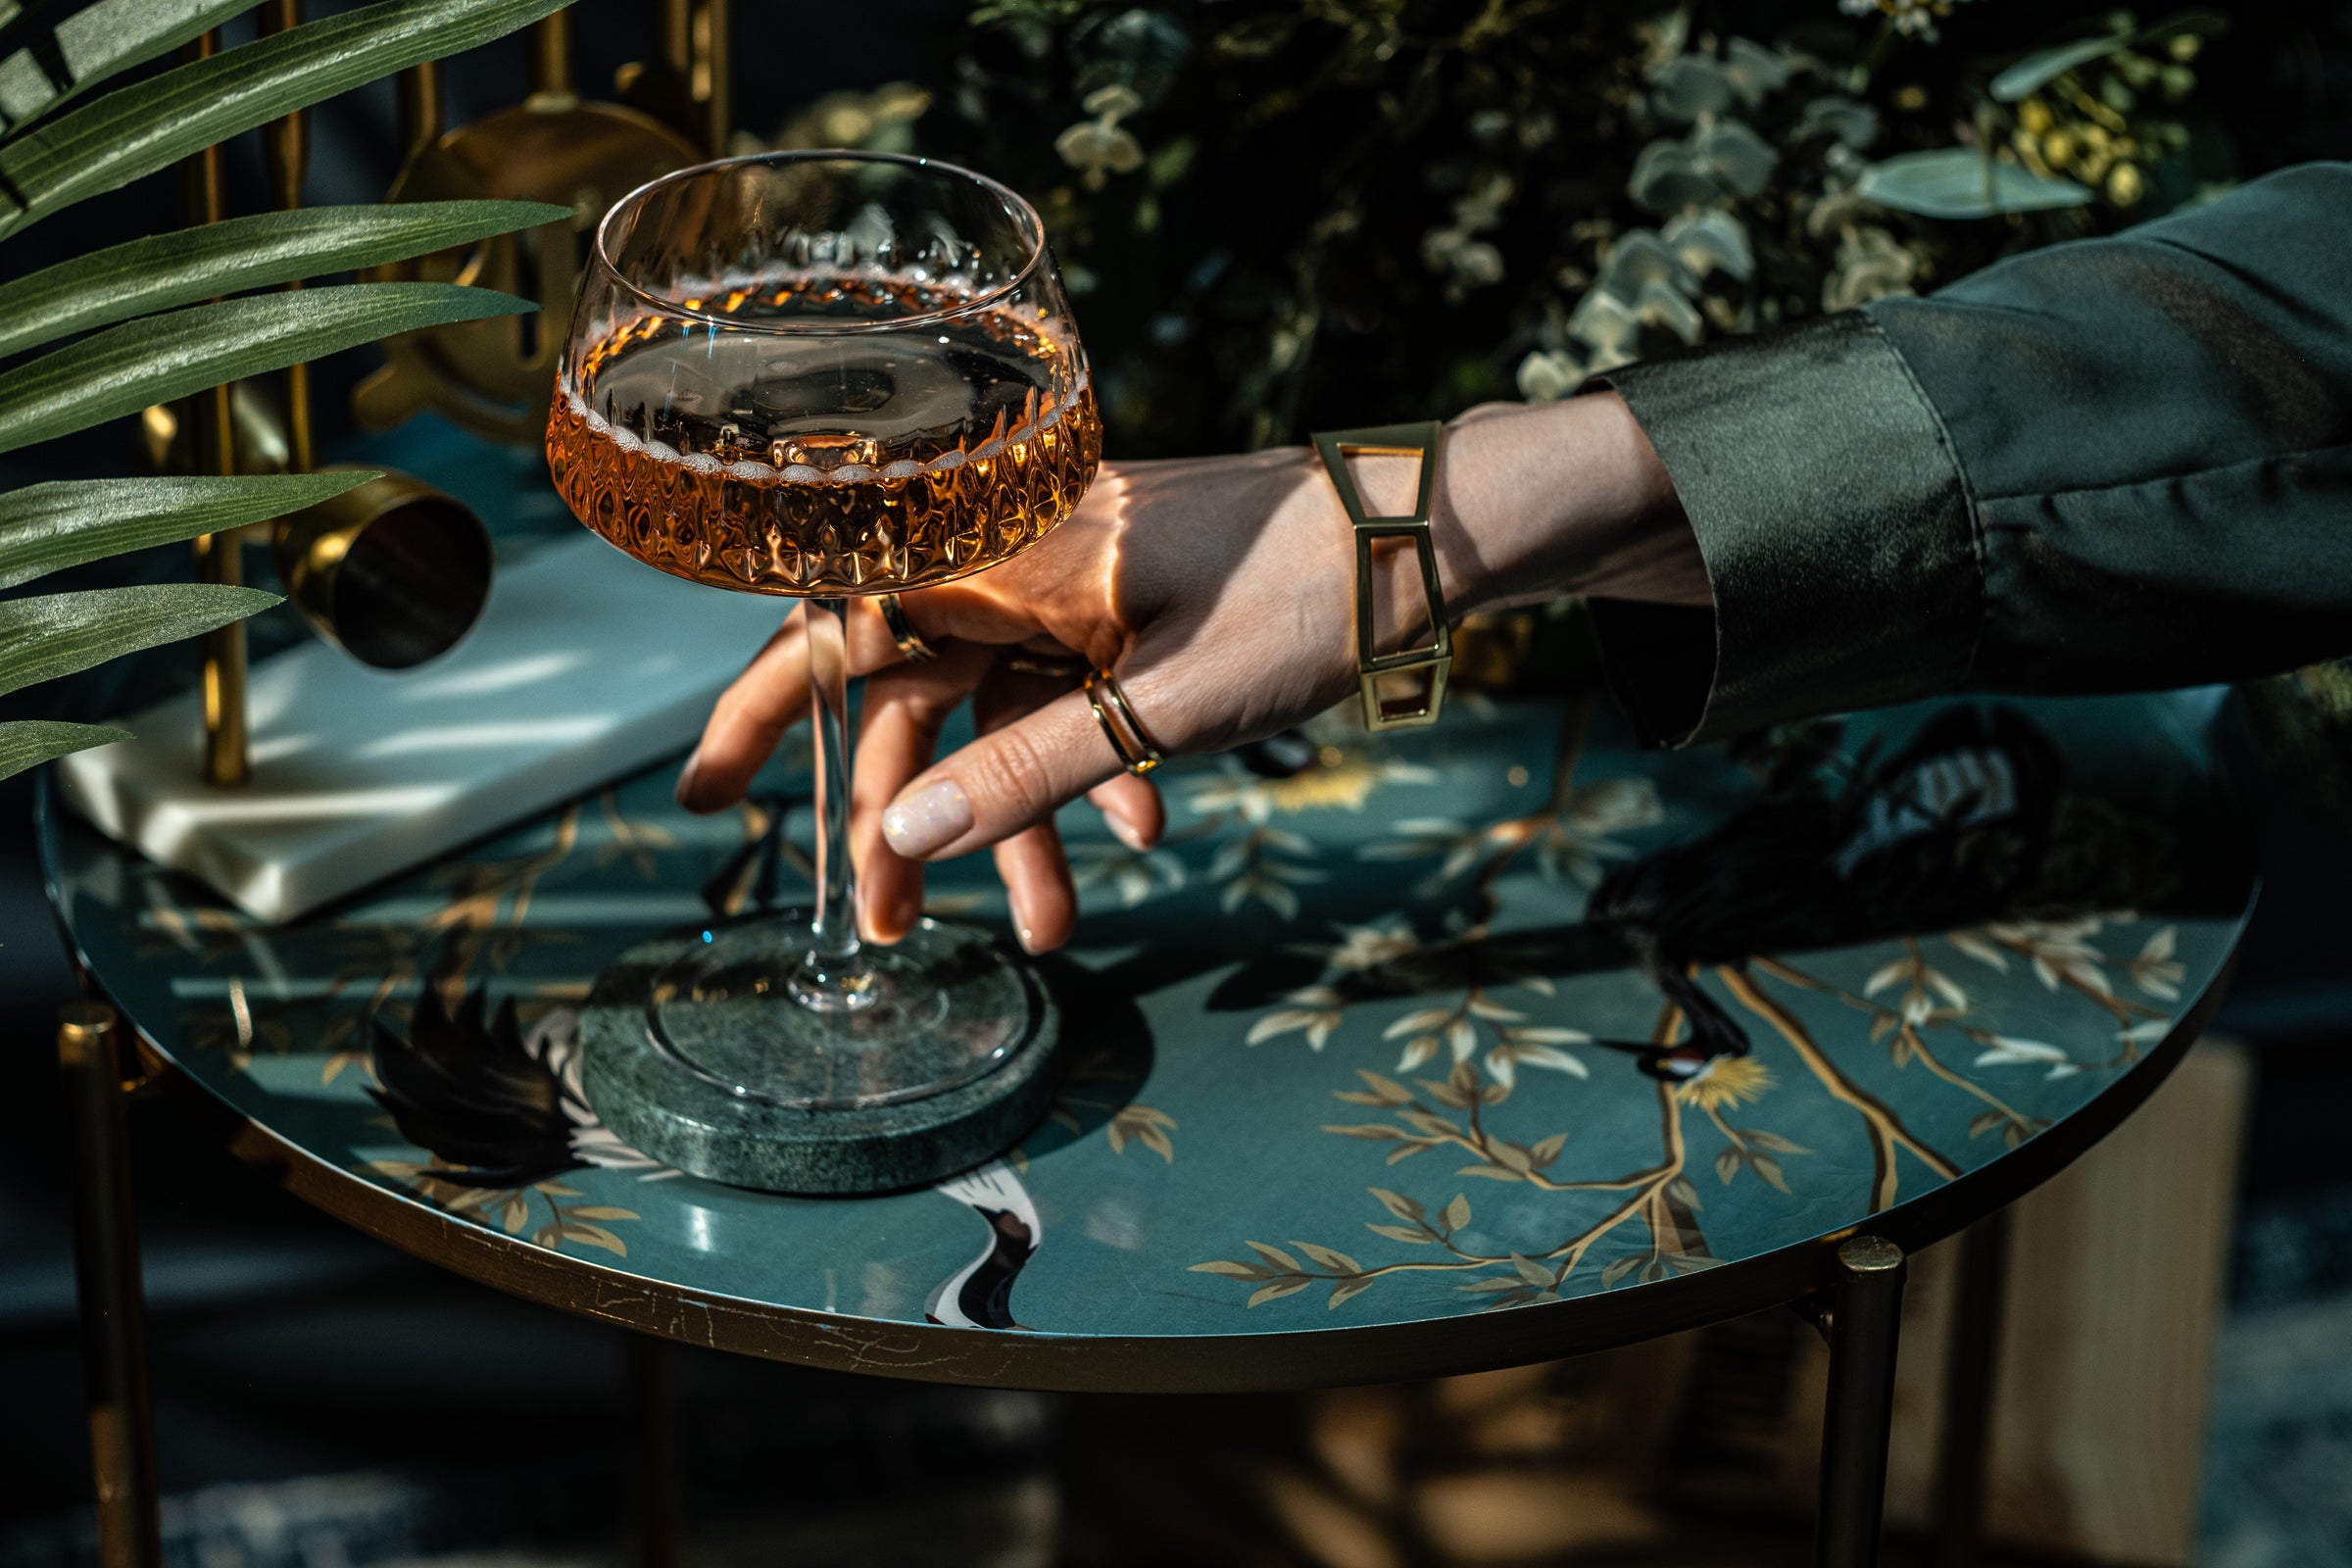 Cordial and Liqueur Mini Wine Glasses – Glassique Cadeau